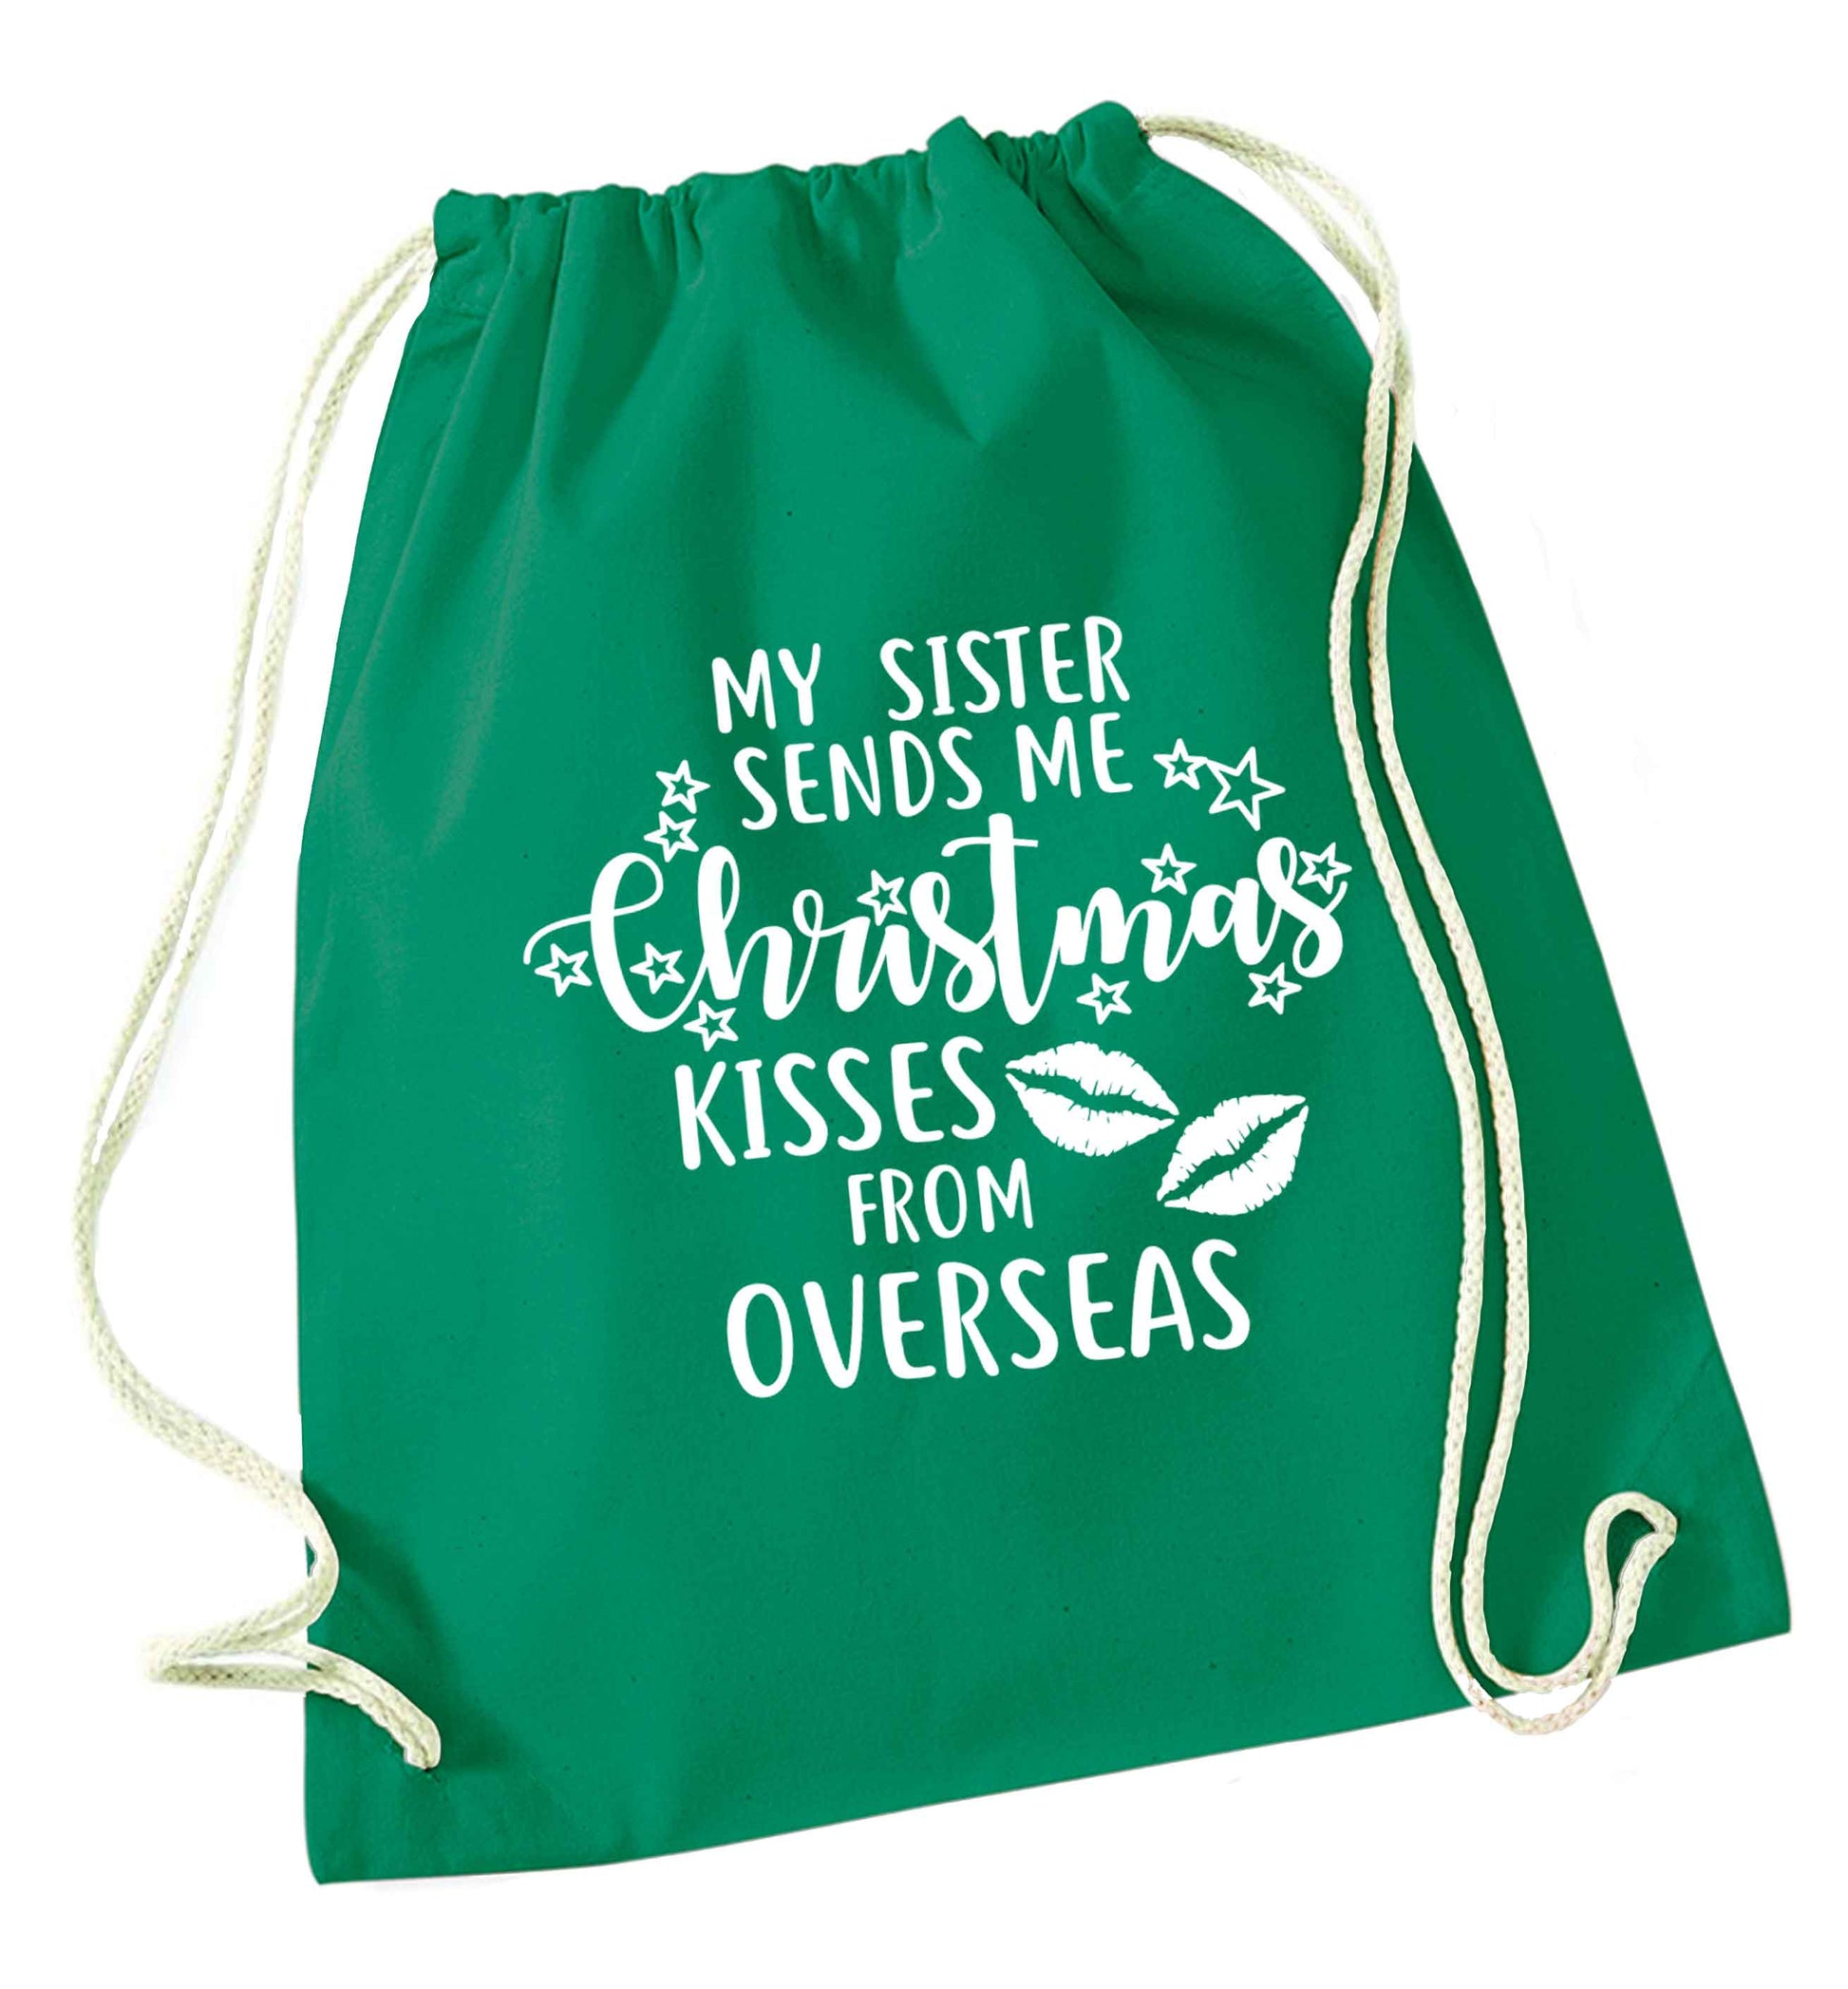 Grandad Christmas Kisses Overseas green drawstring bag